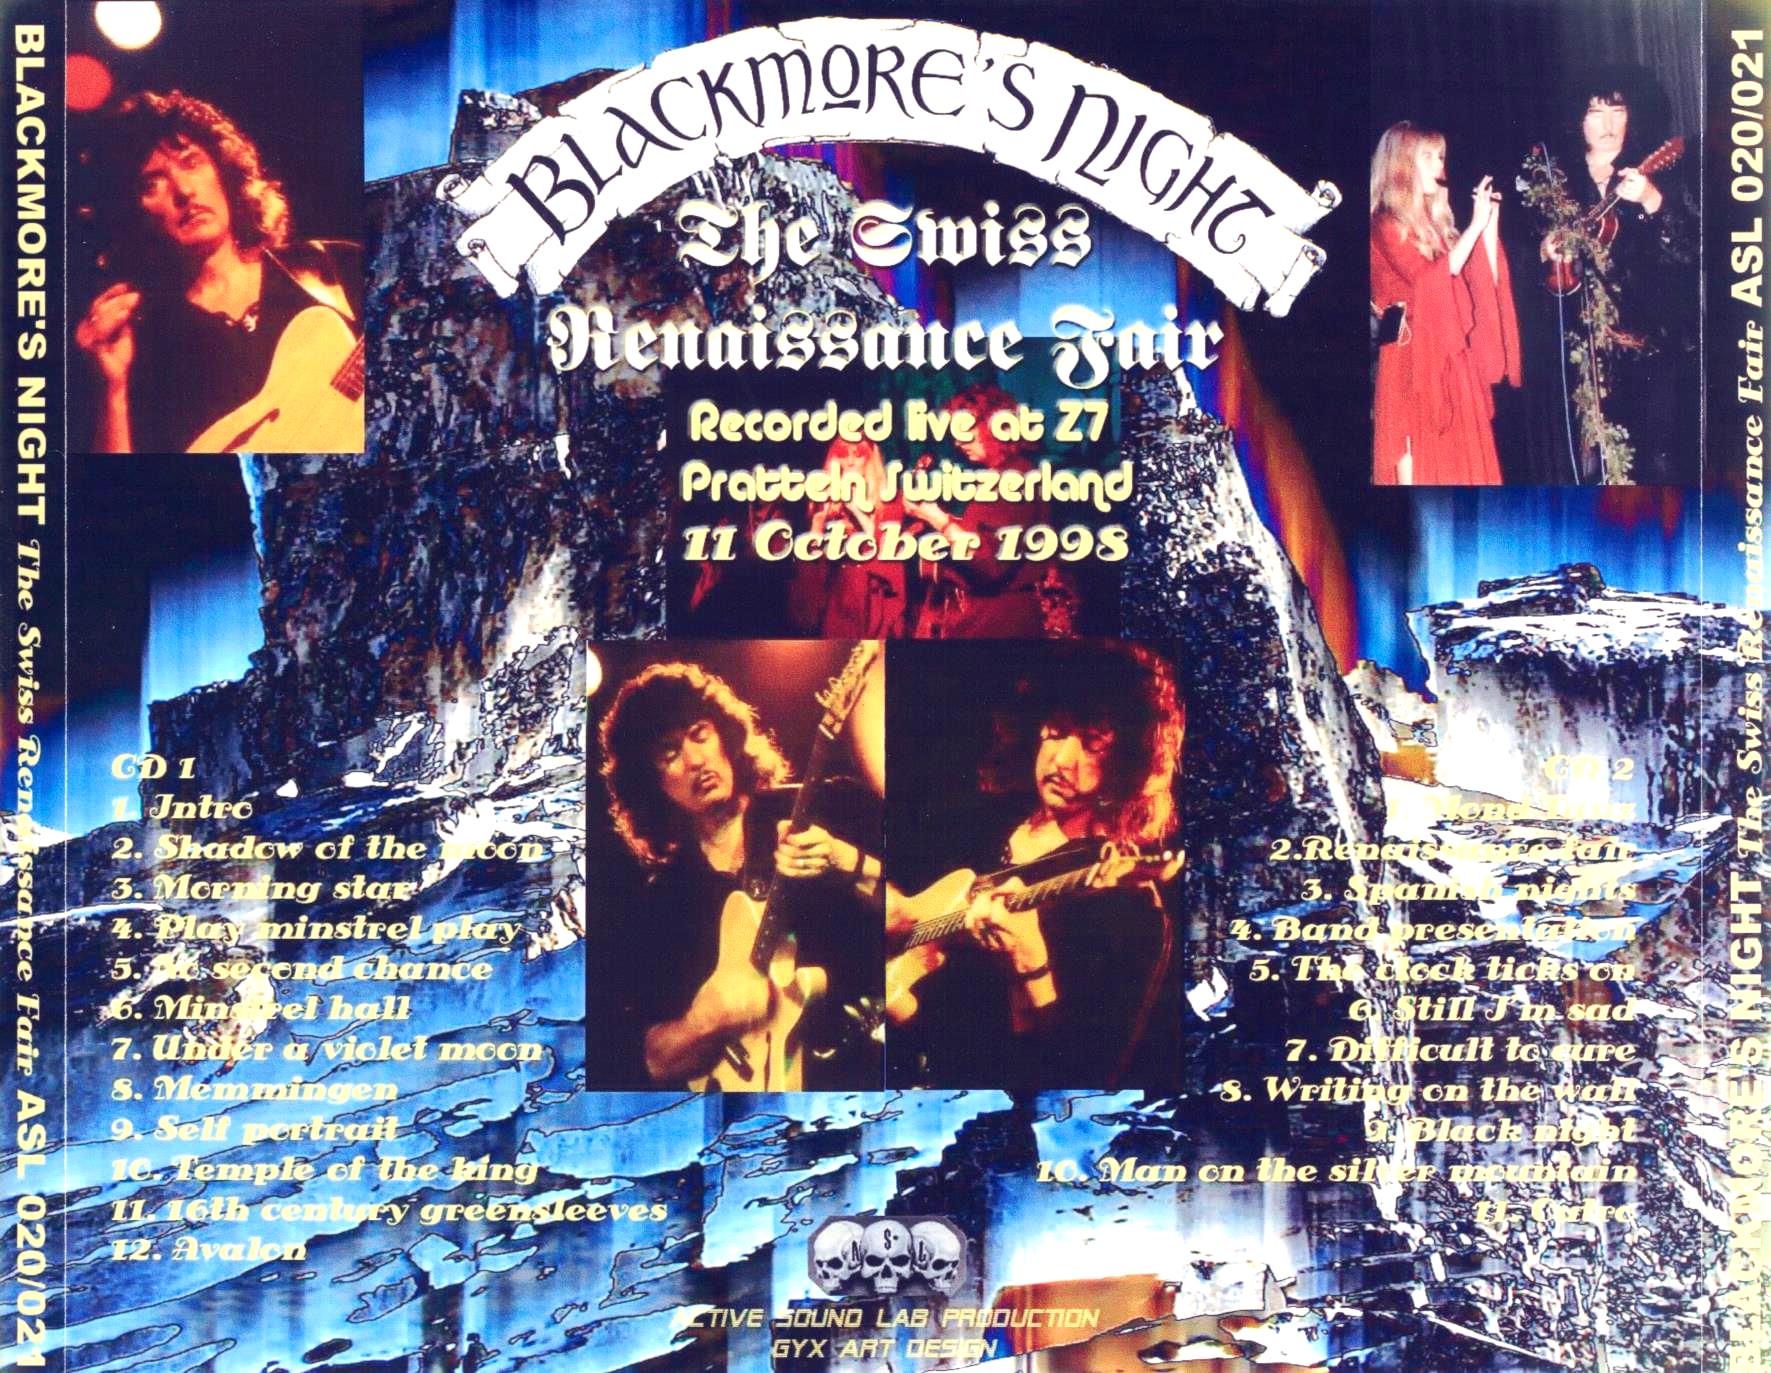 BlackmoresNight1998-10-11KonzertfabrikPrattelnSwitzerland (2).jpg